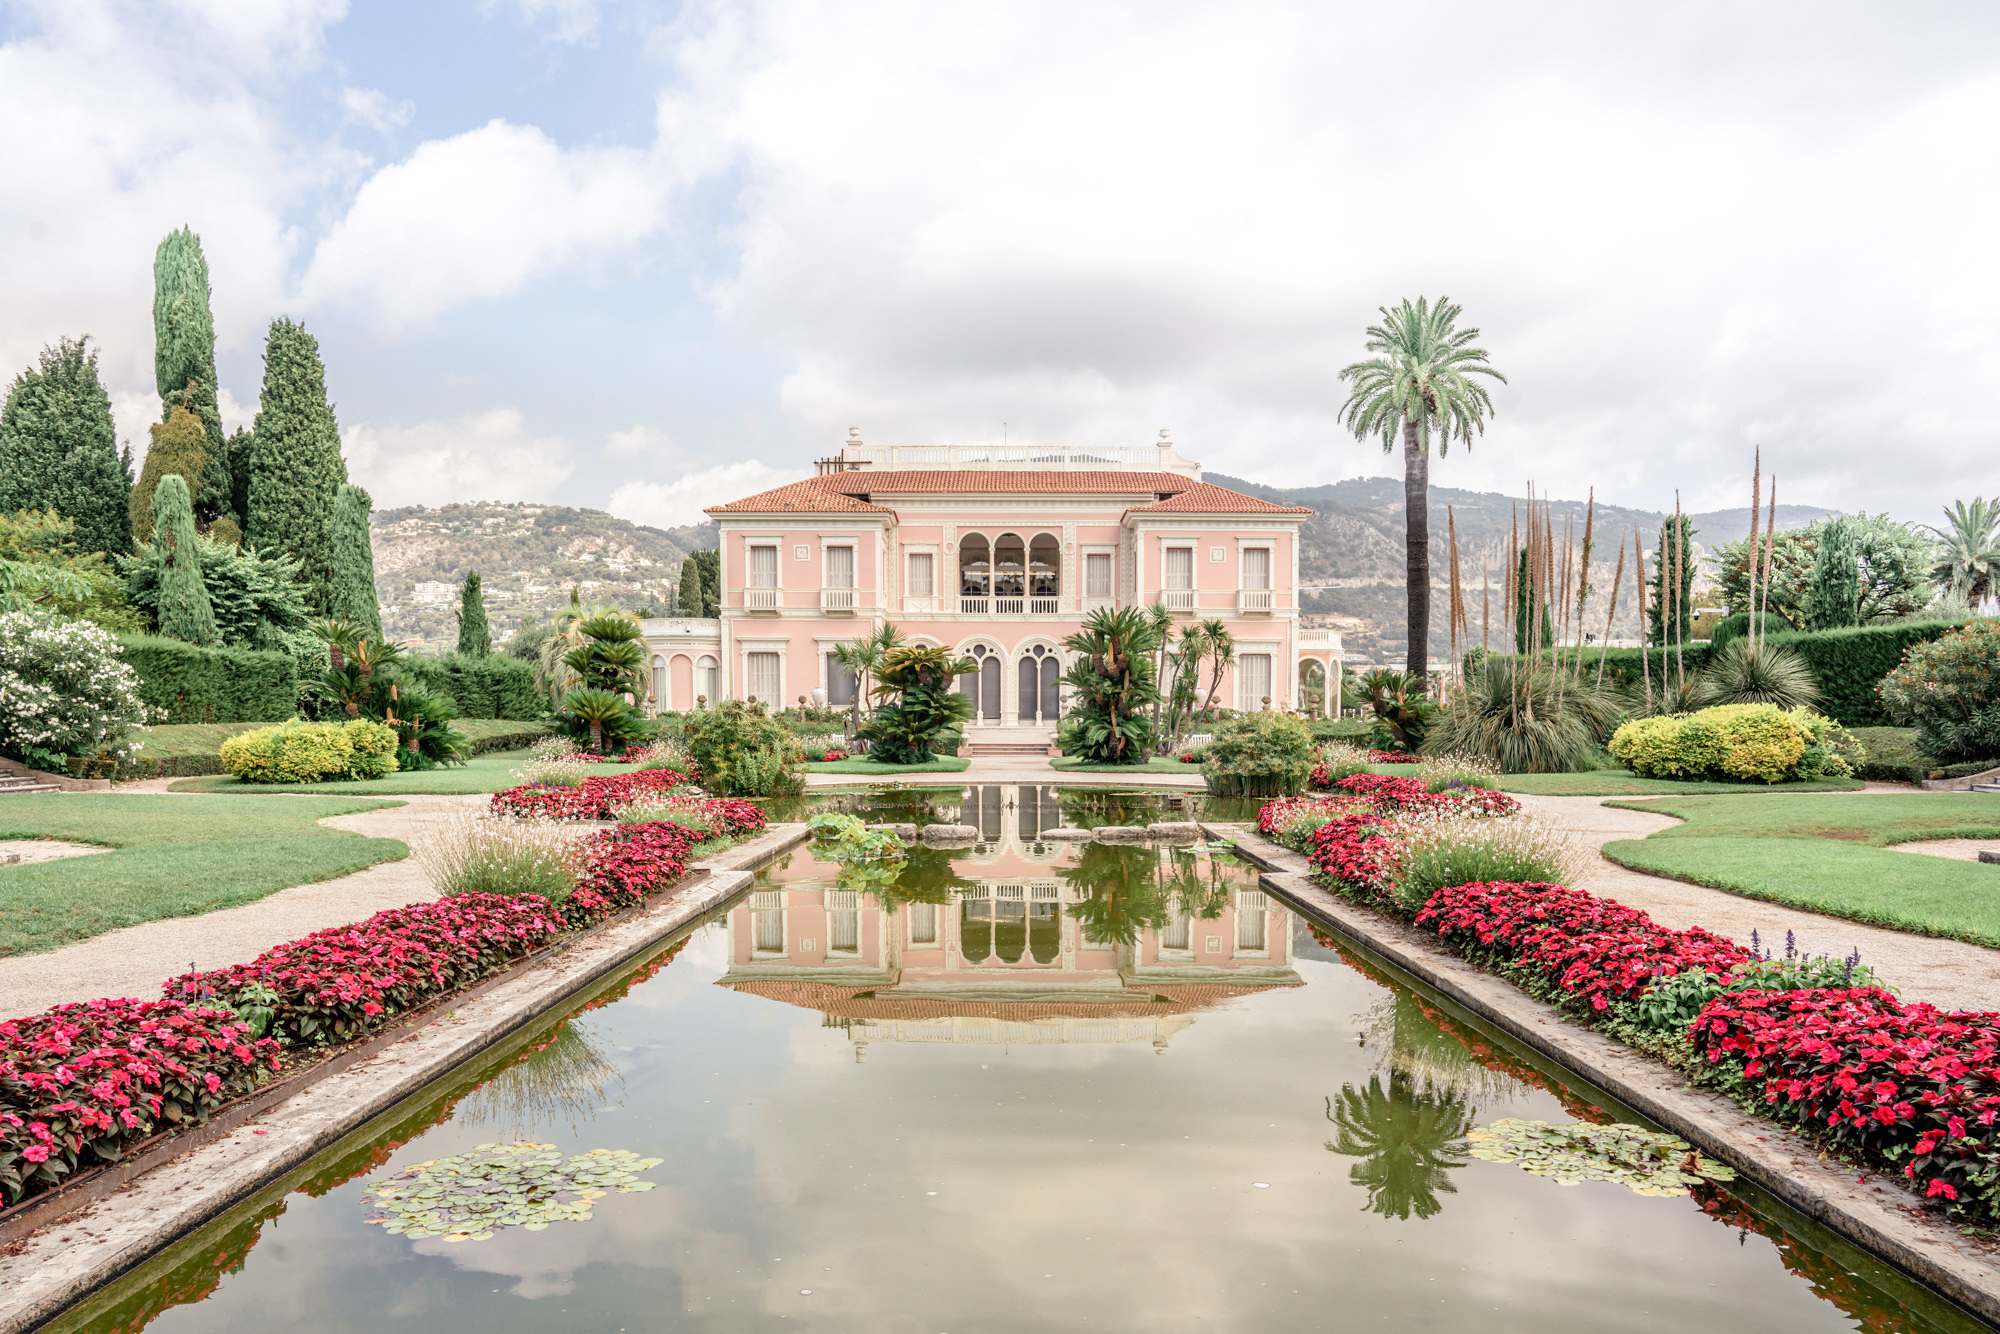 Villa Ephrussi de Rothschild on the French Riviera